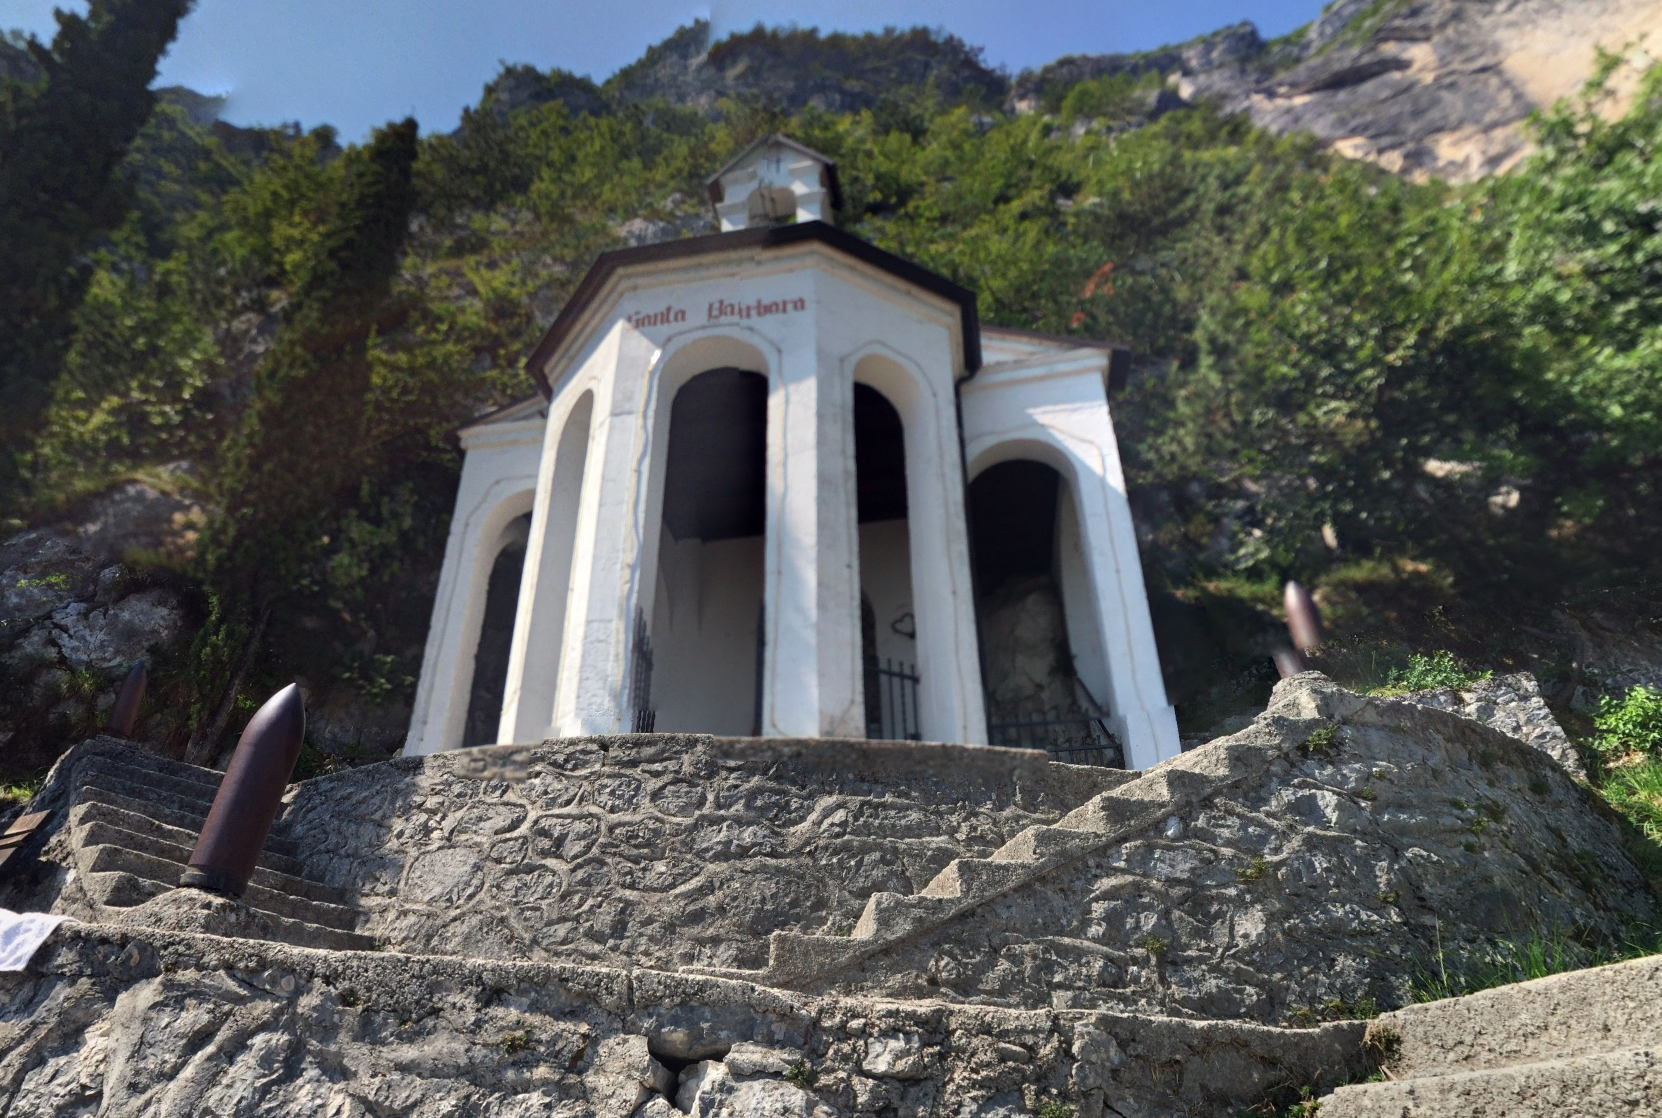 Chapel Santa Barbara by Google Earth